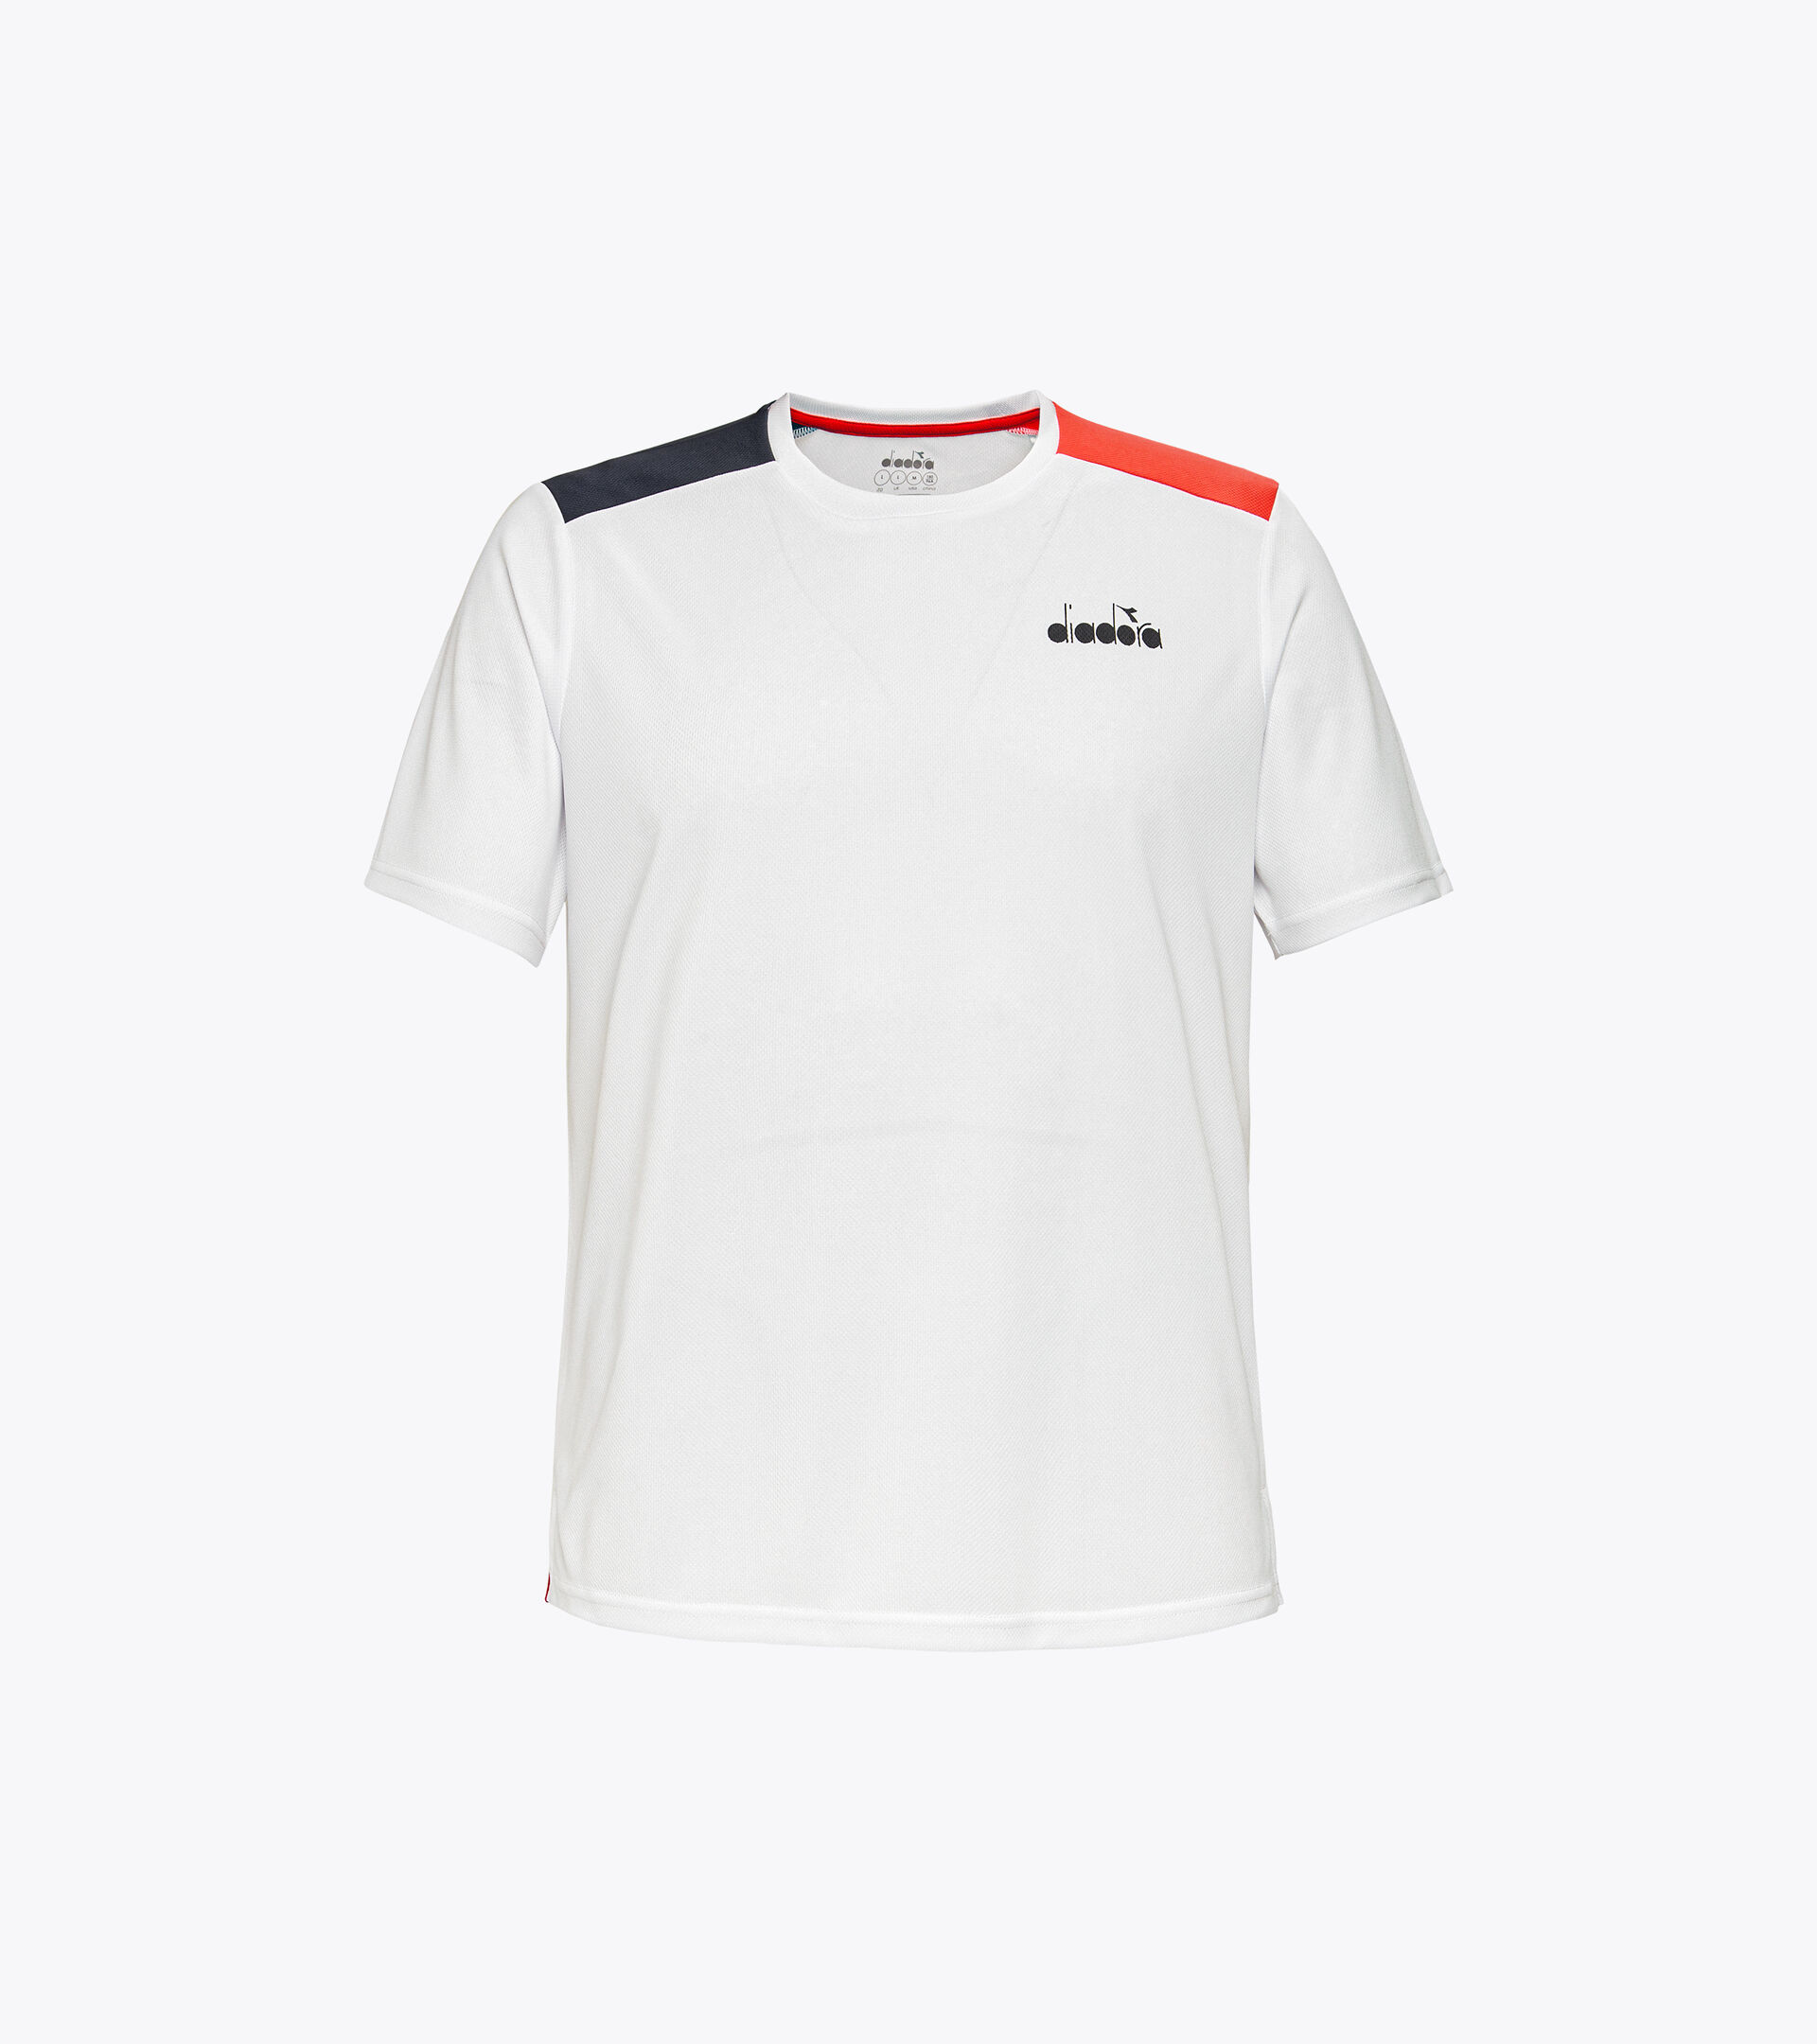 Tennis shirt - Men SS CORE T-SHIRT T OPTICAL WHITE - Diadora